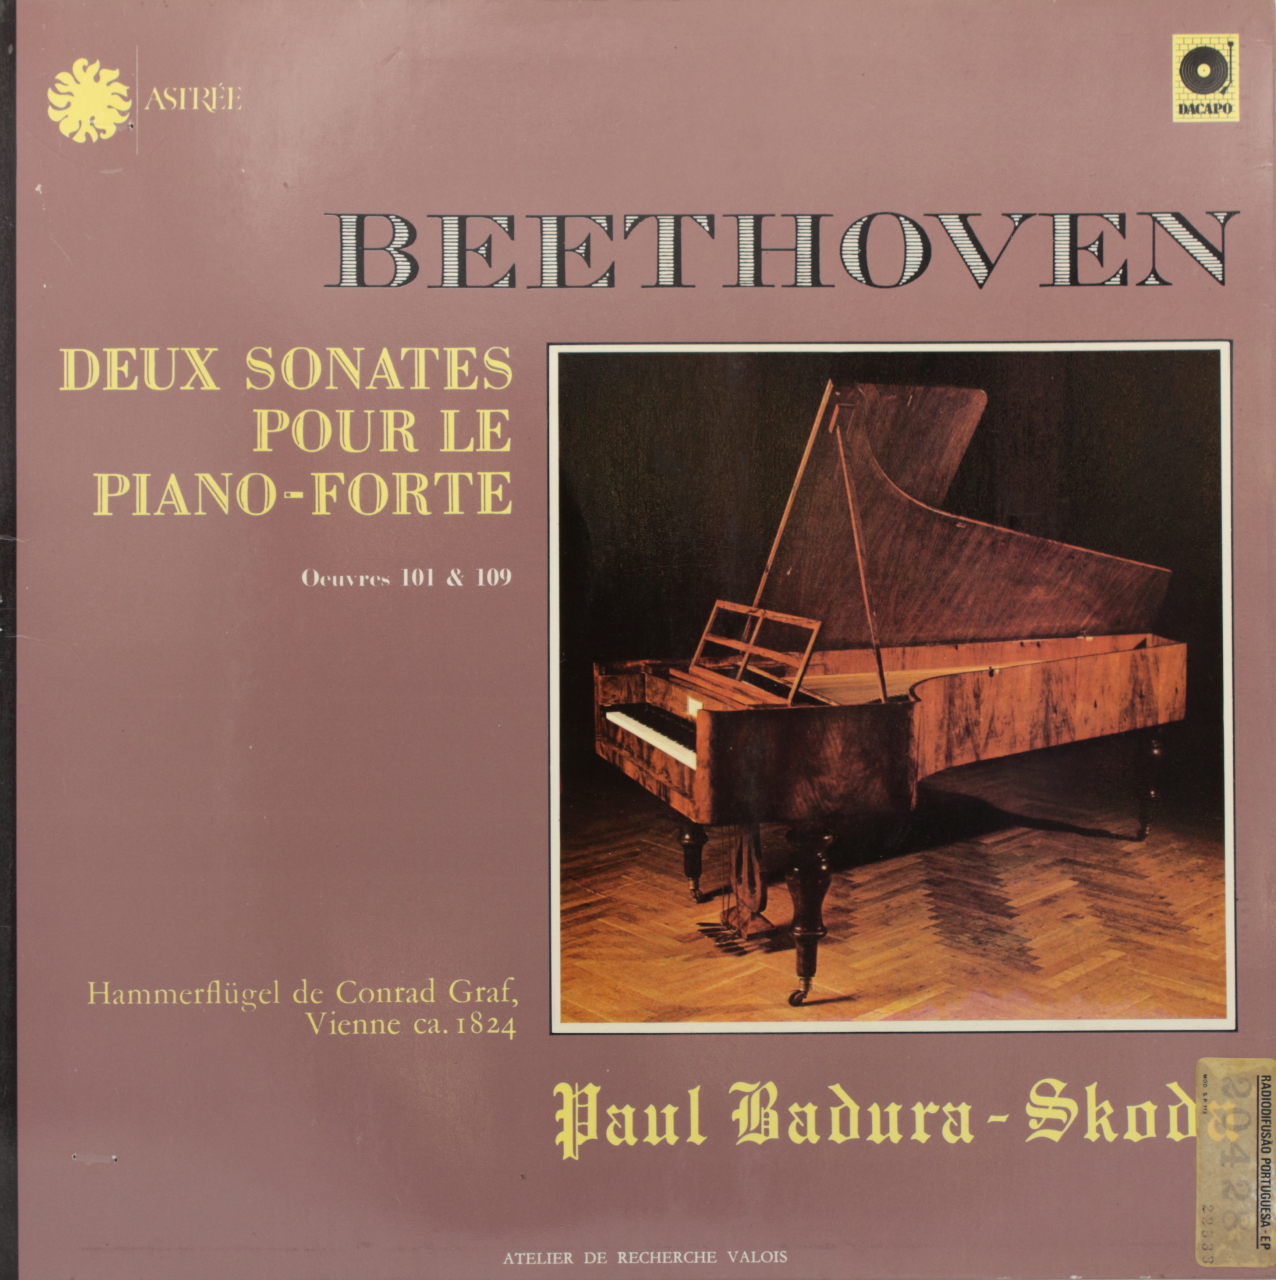 Beethoven: Deux sonates pour le piano-forte, Oeuvres 101 & 109